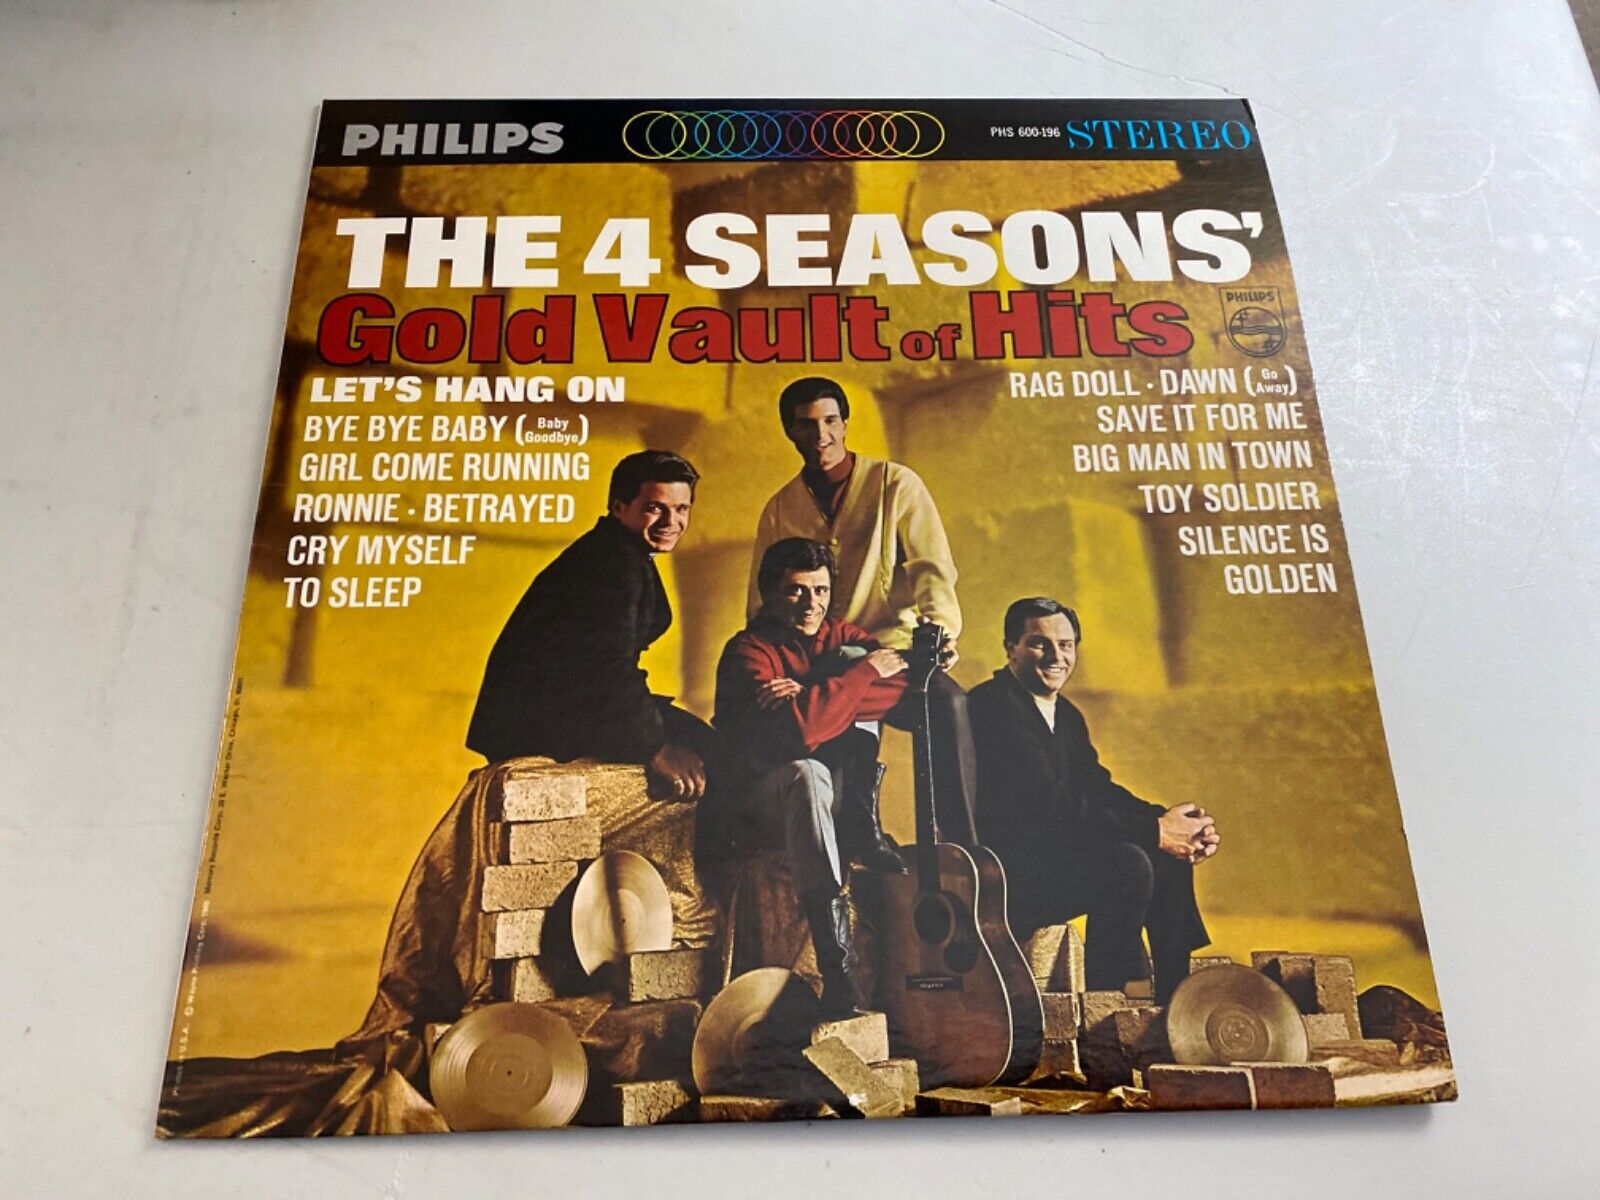 THE 4 SEASONS GOLD VAULT OF HITS VINYL LP RECORD ALBUM PHILIPS PHS 600-196 VG+